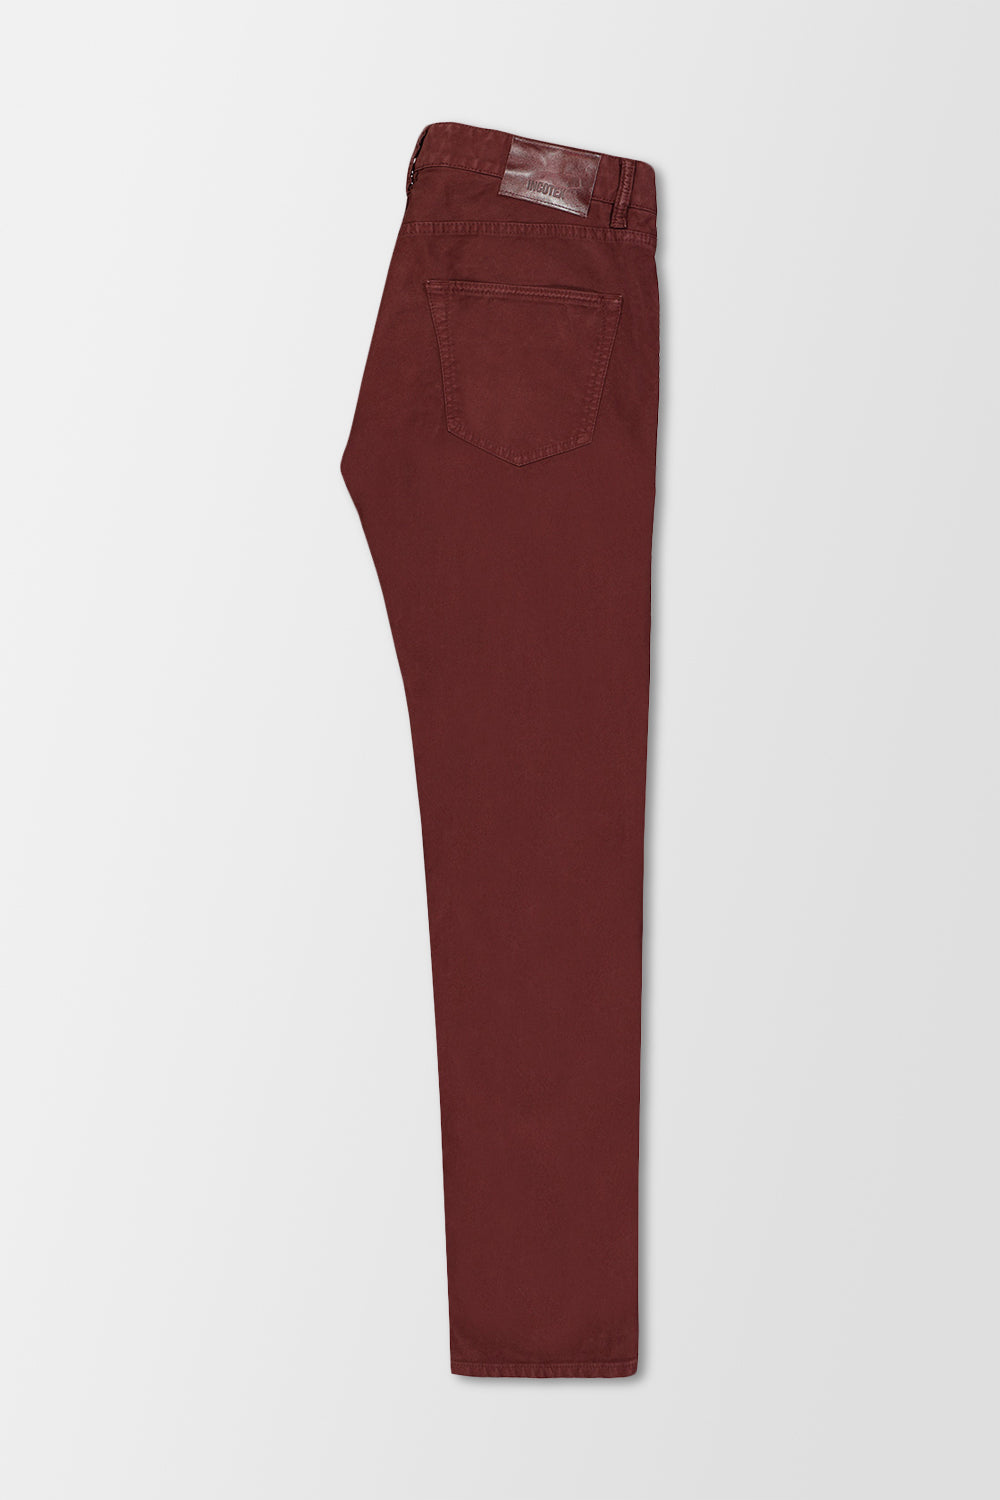 Incotex Burgundy Casual Trousers